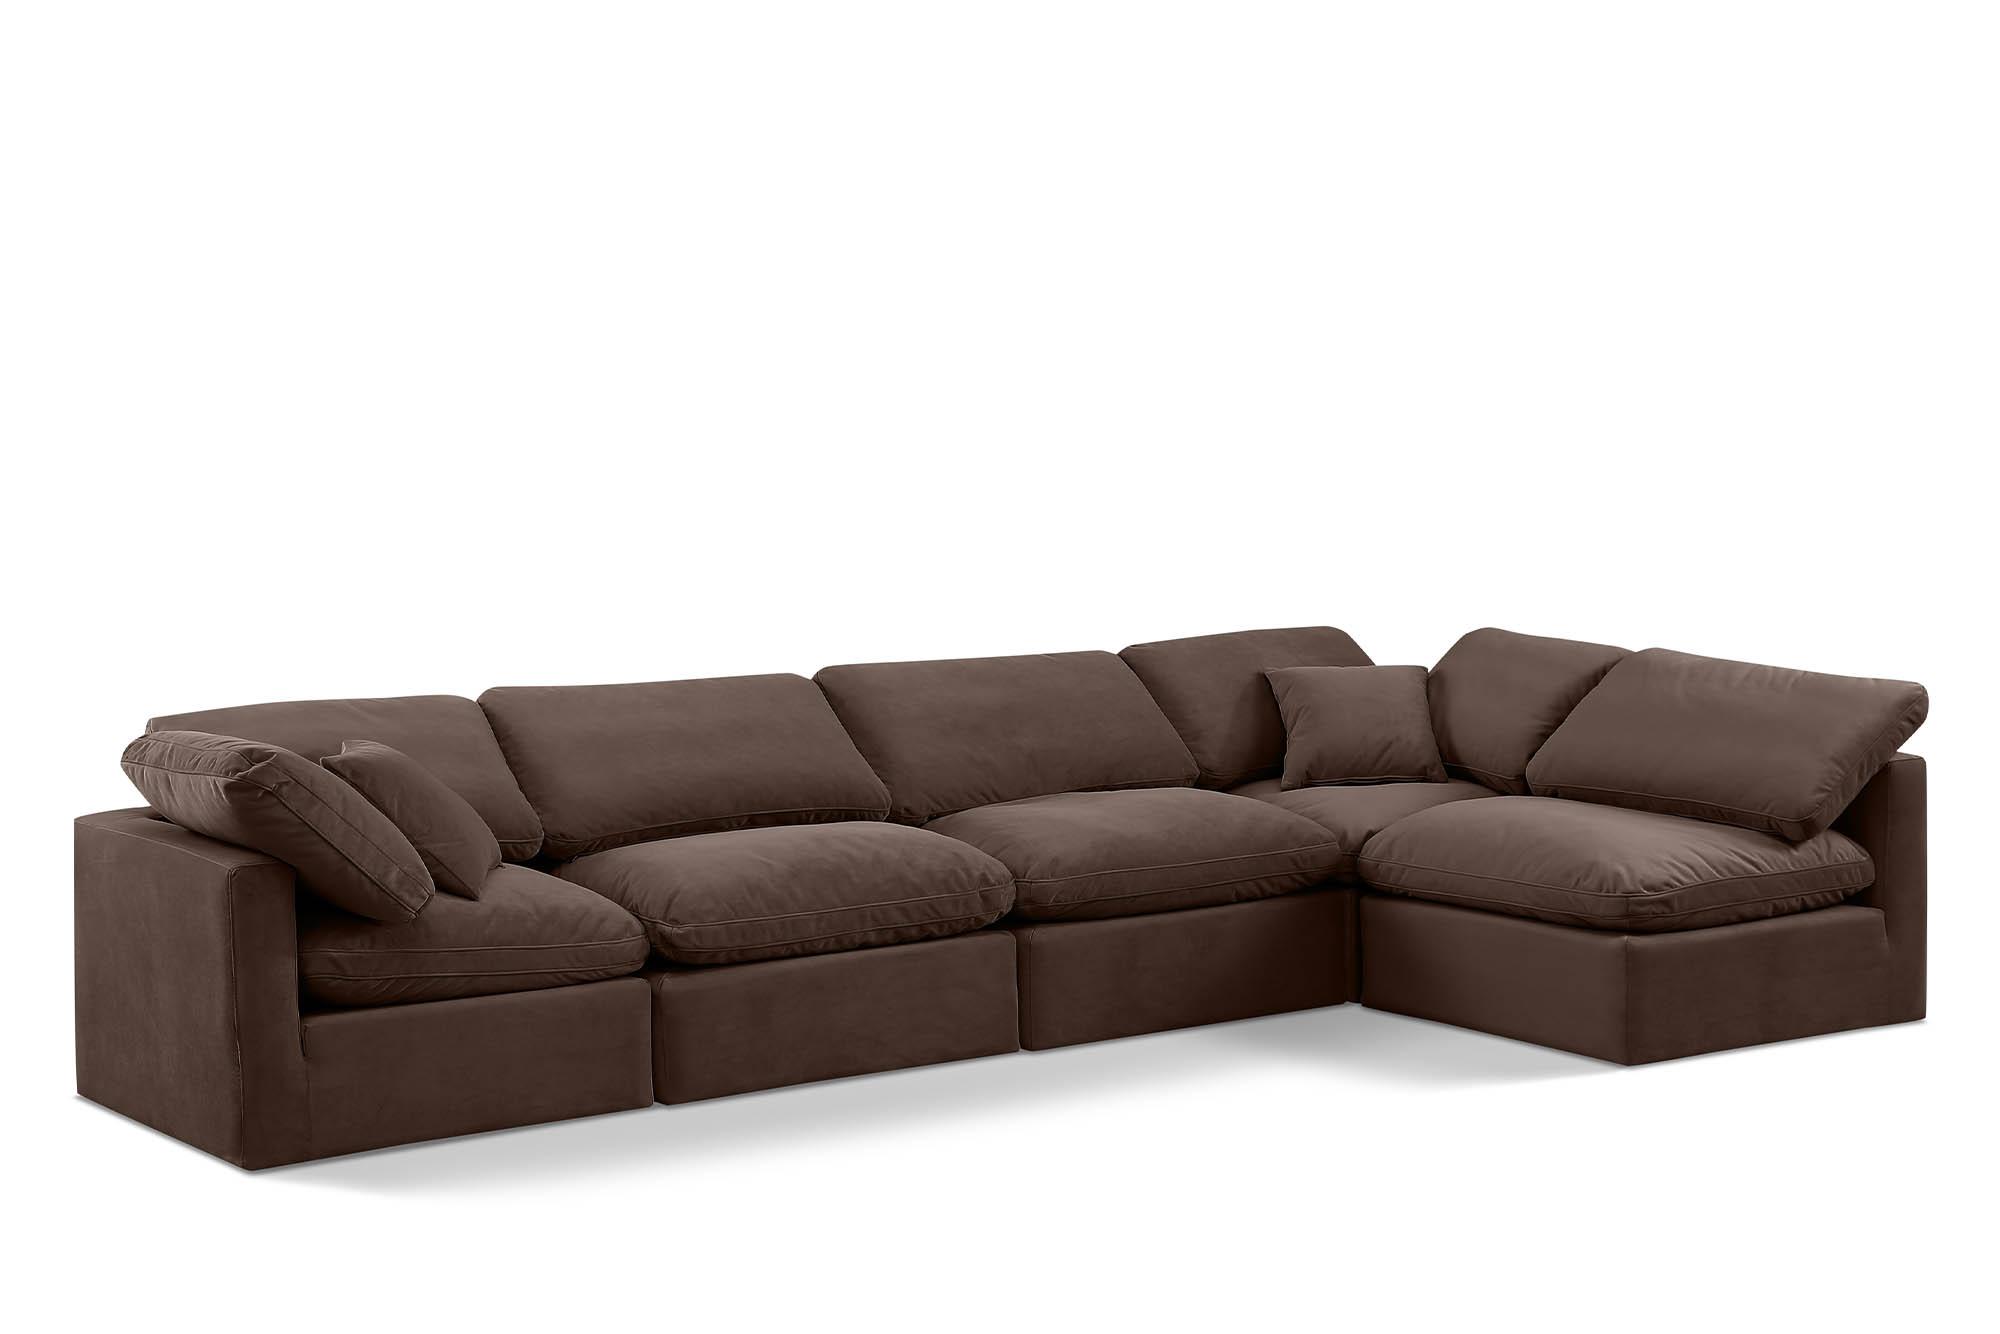 Contemporary, Modern Modular Sectional Sofa INDULGE 147Brown-Sec5D 147Brown-Sec5D in Brown Velvet